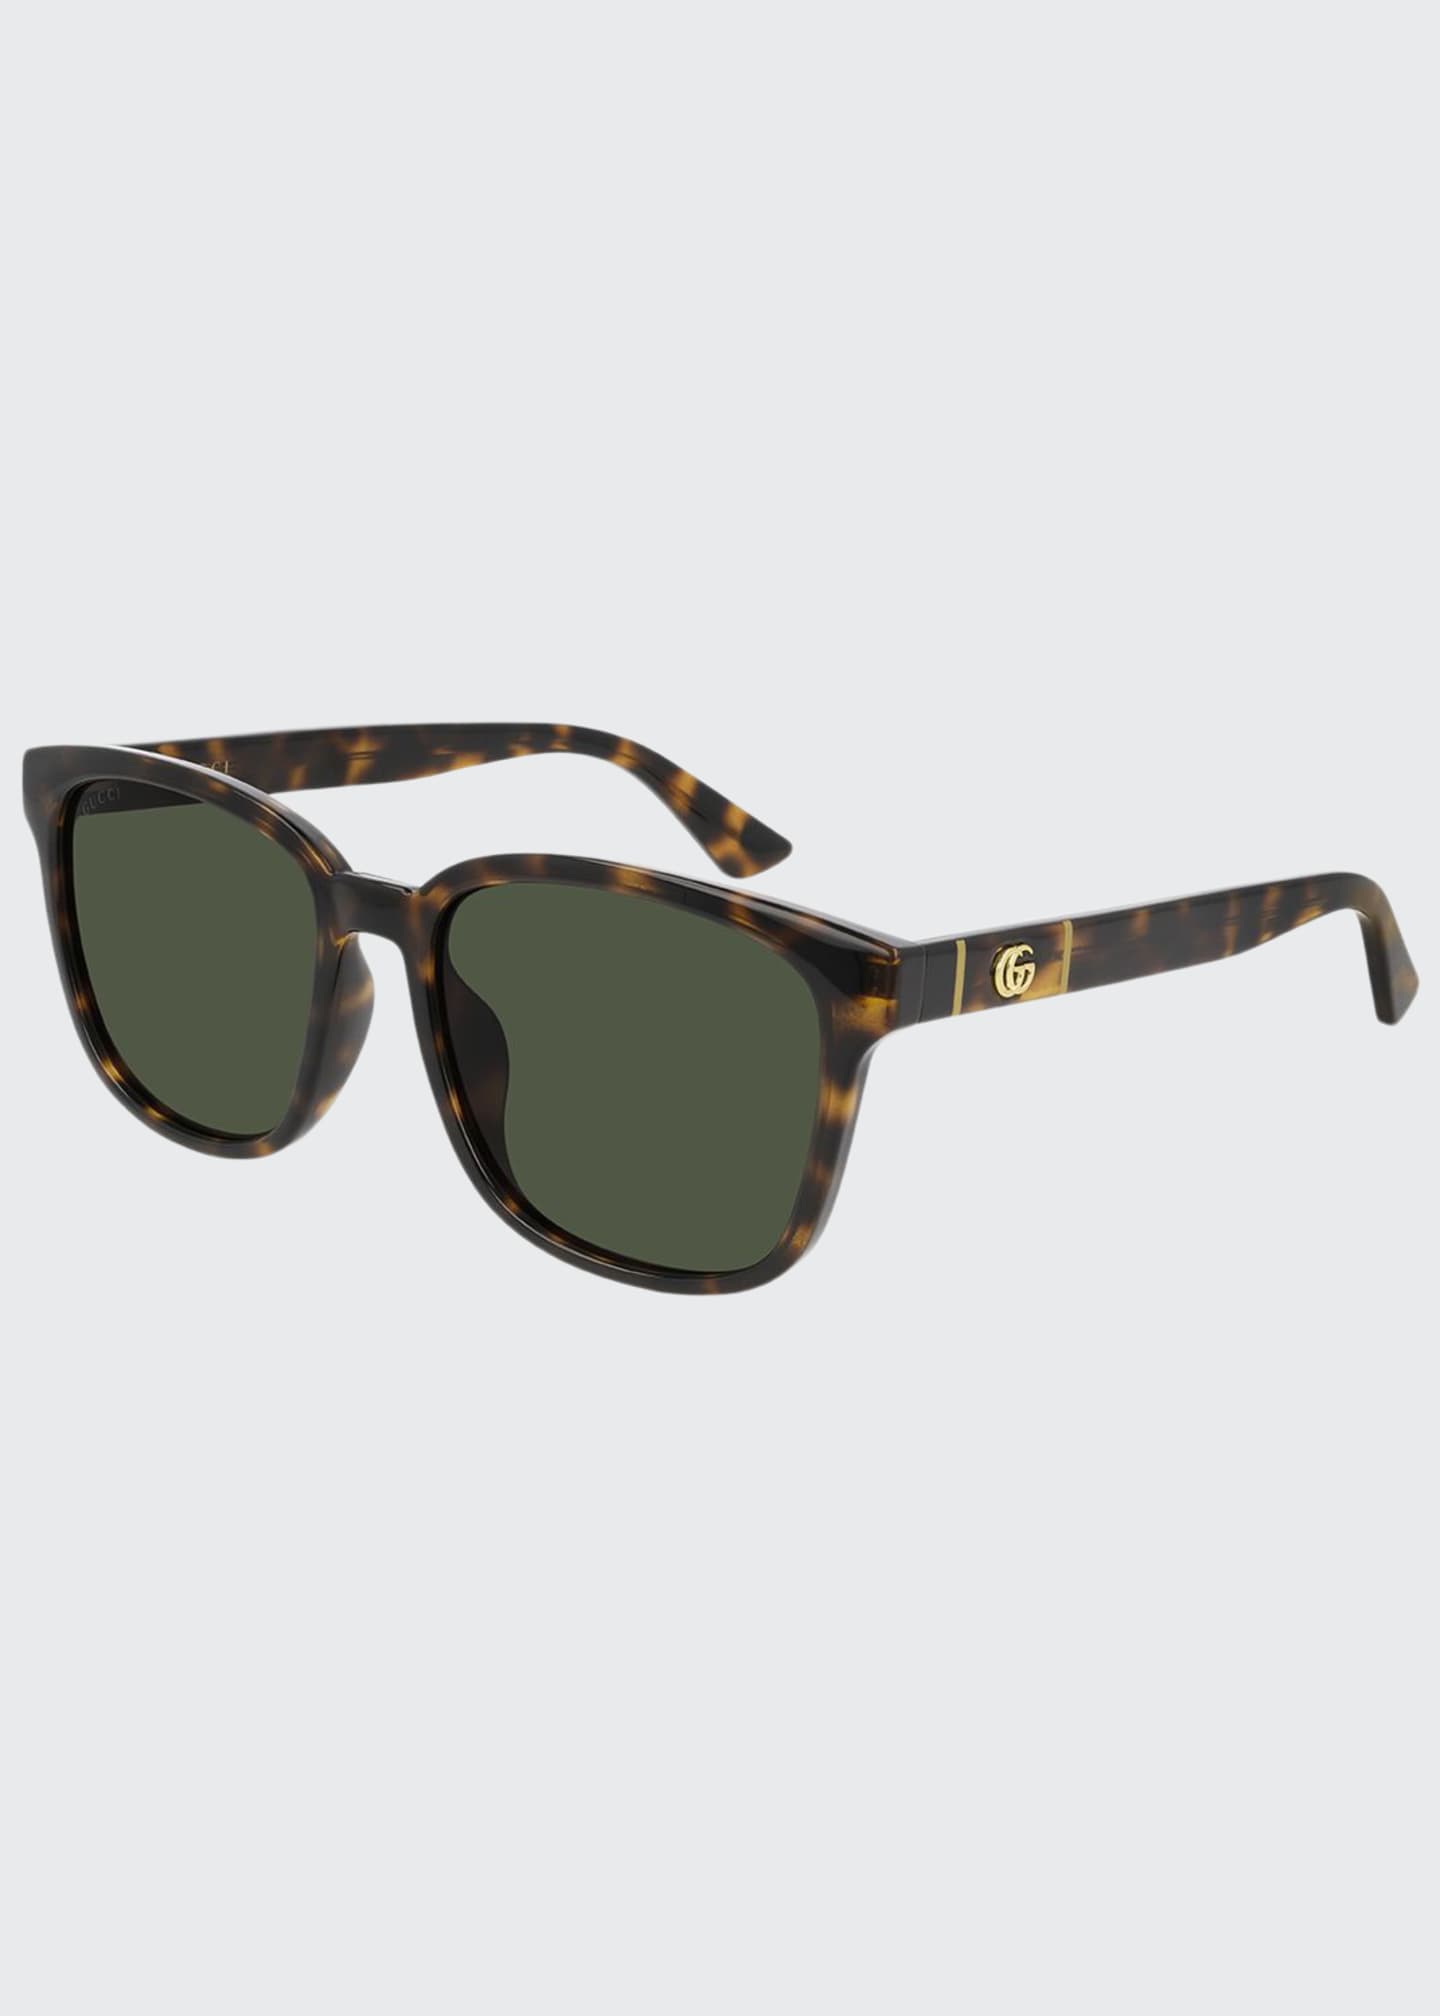 Gucci Sunglasses & Gucci Aviator Sunglasses | Bergdorf Goodman